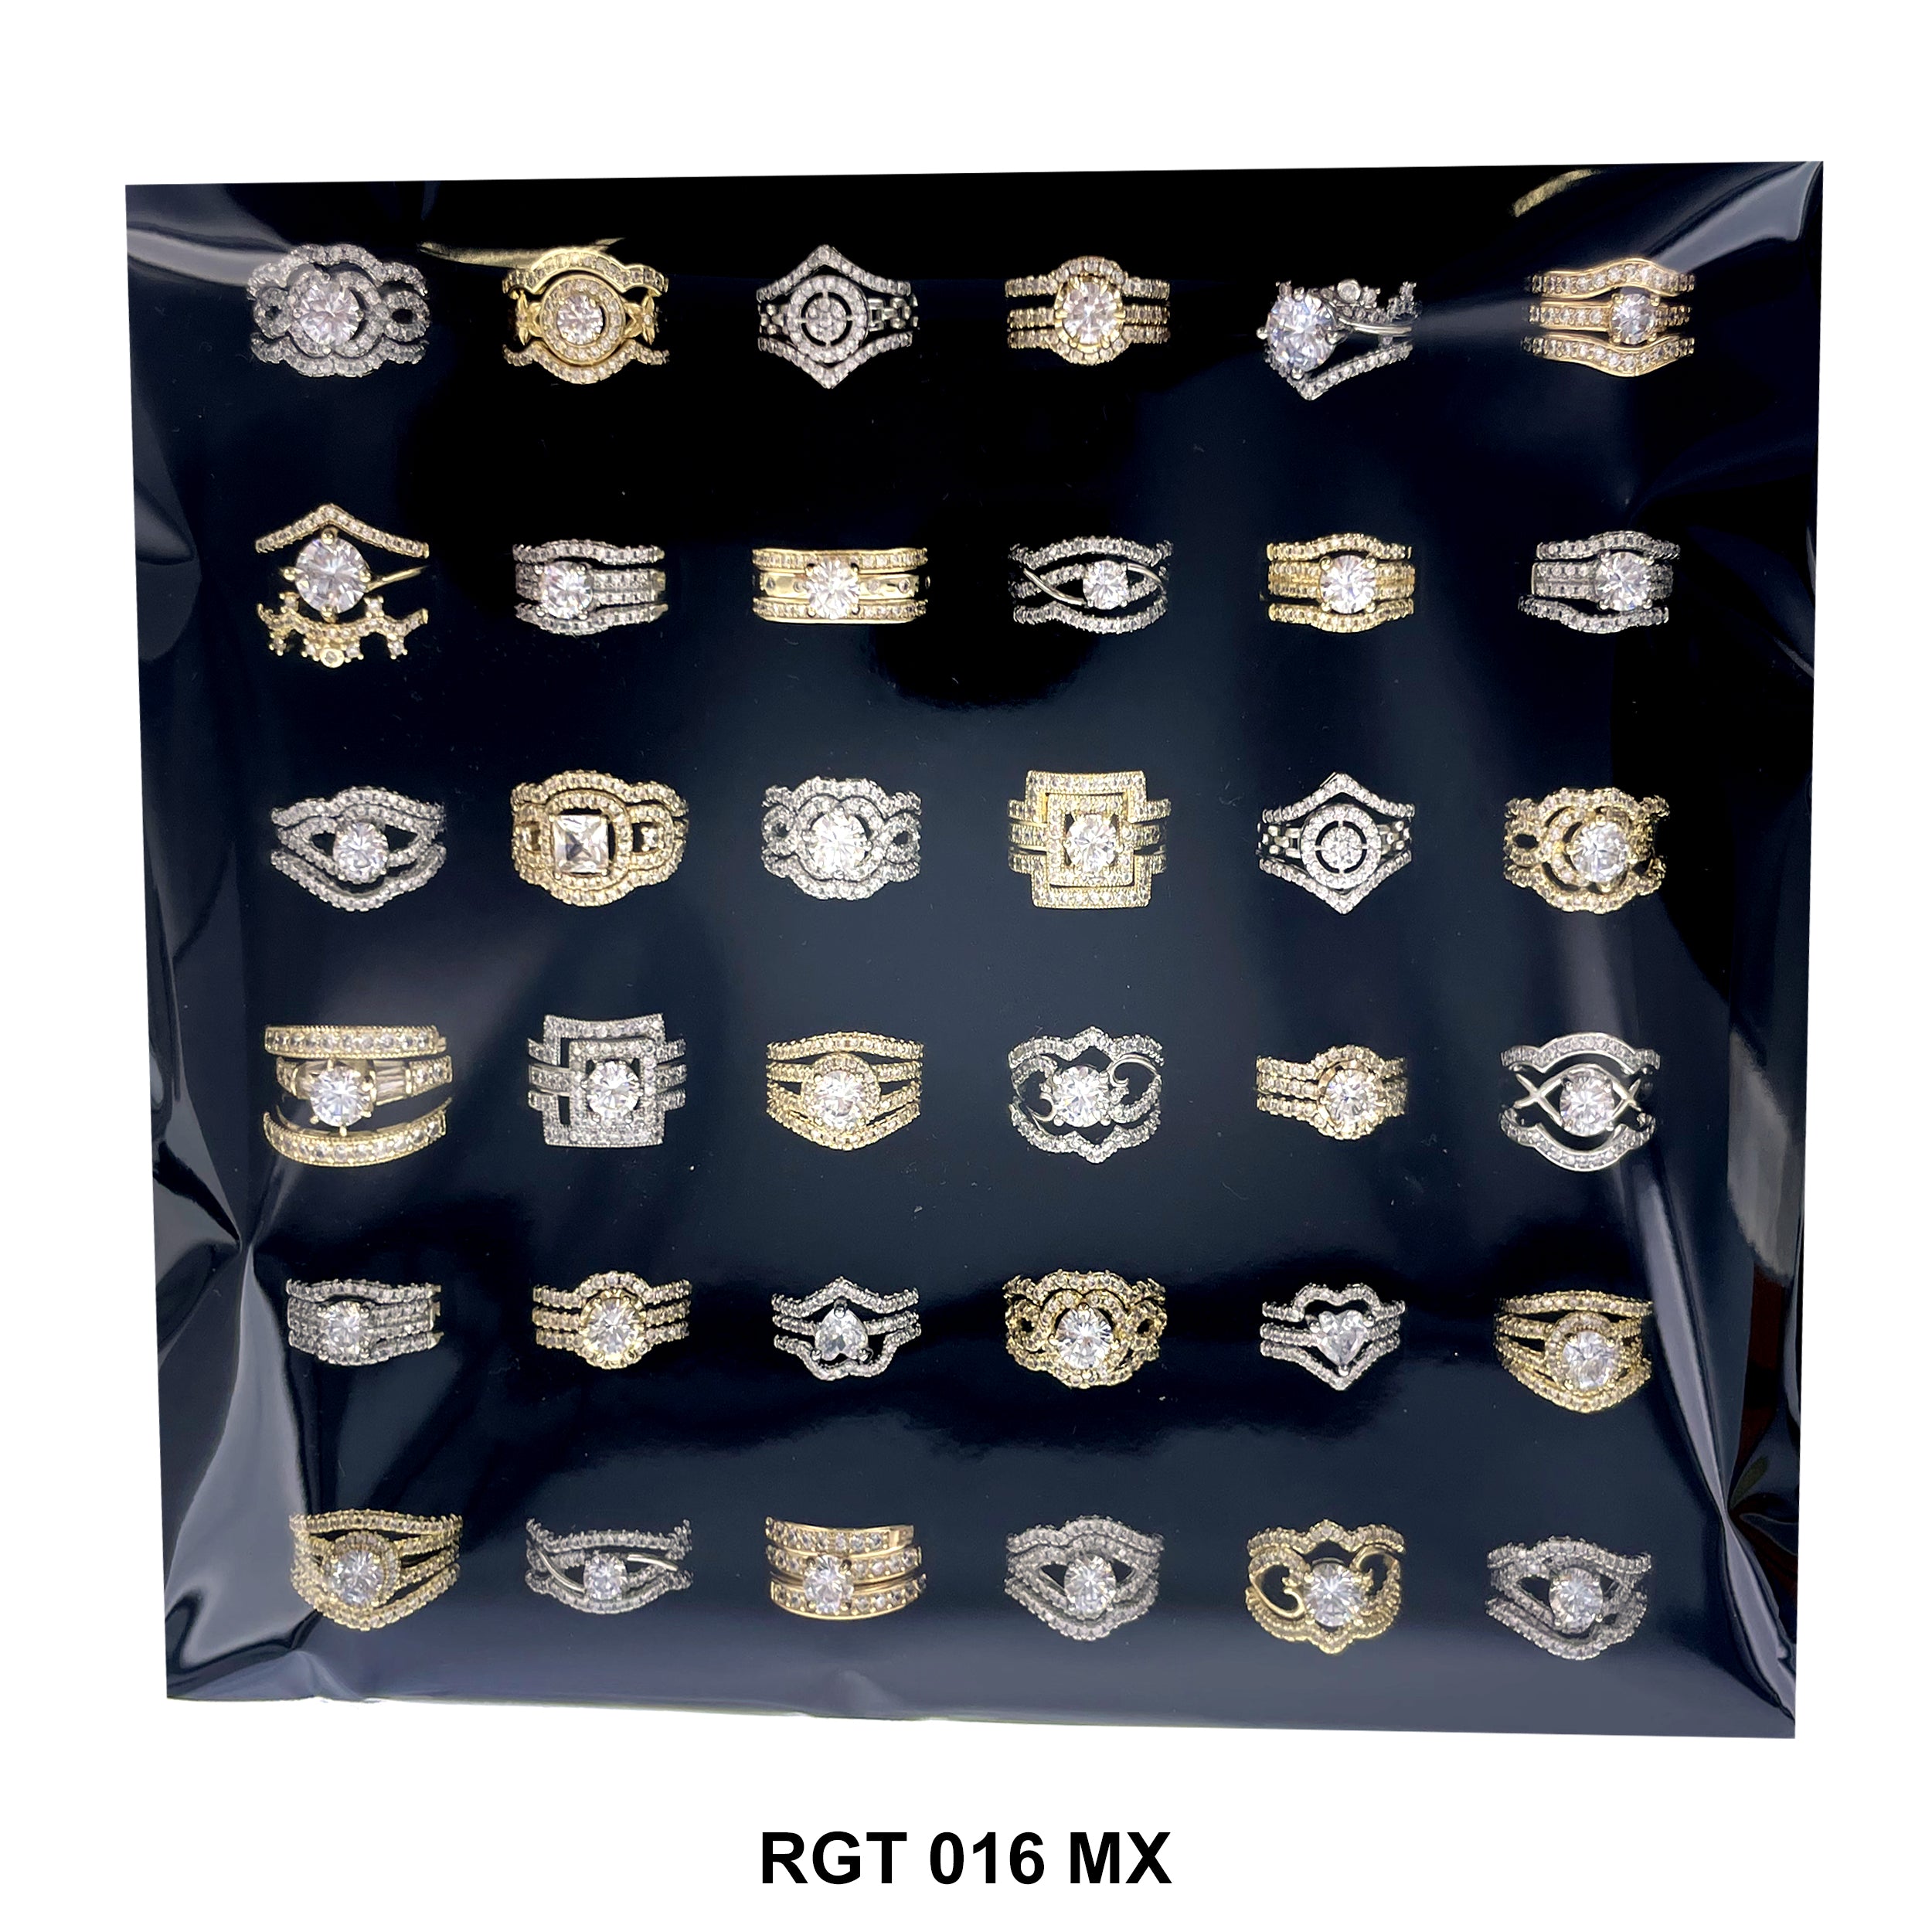 Triple Matrimonial Stones Ring RGT 016 MX